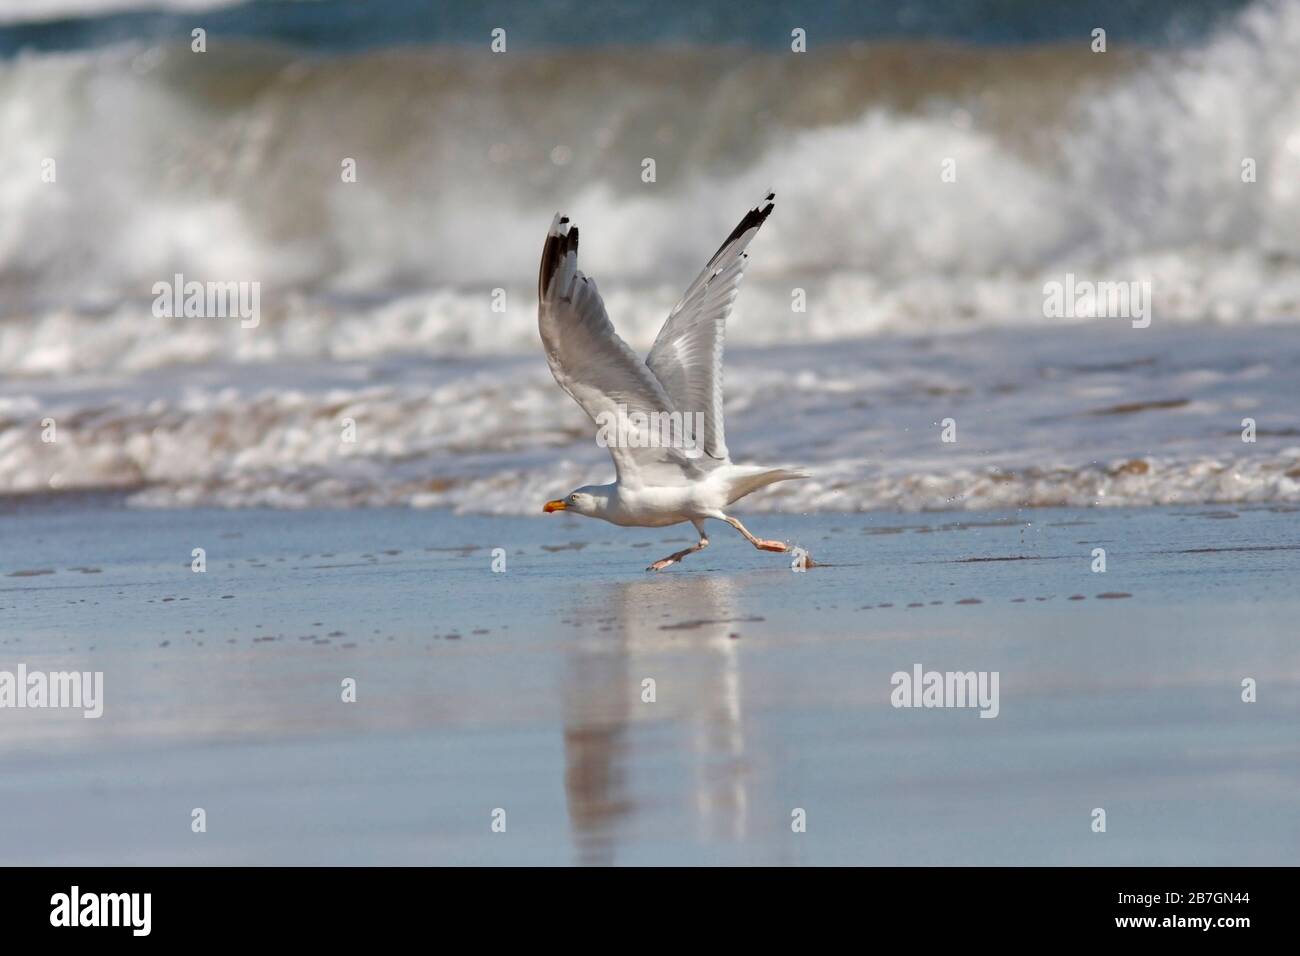 HERRING GULL (Larus argentatus) seagull running to take off in front of crashing waves, Scotland, UK. Stock Photo